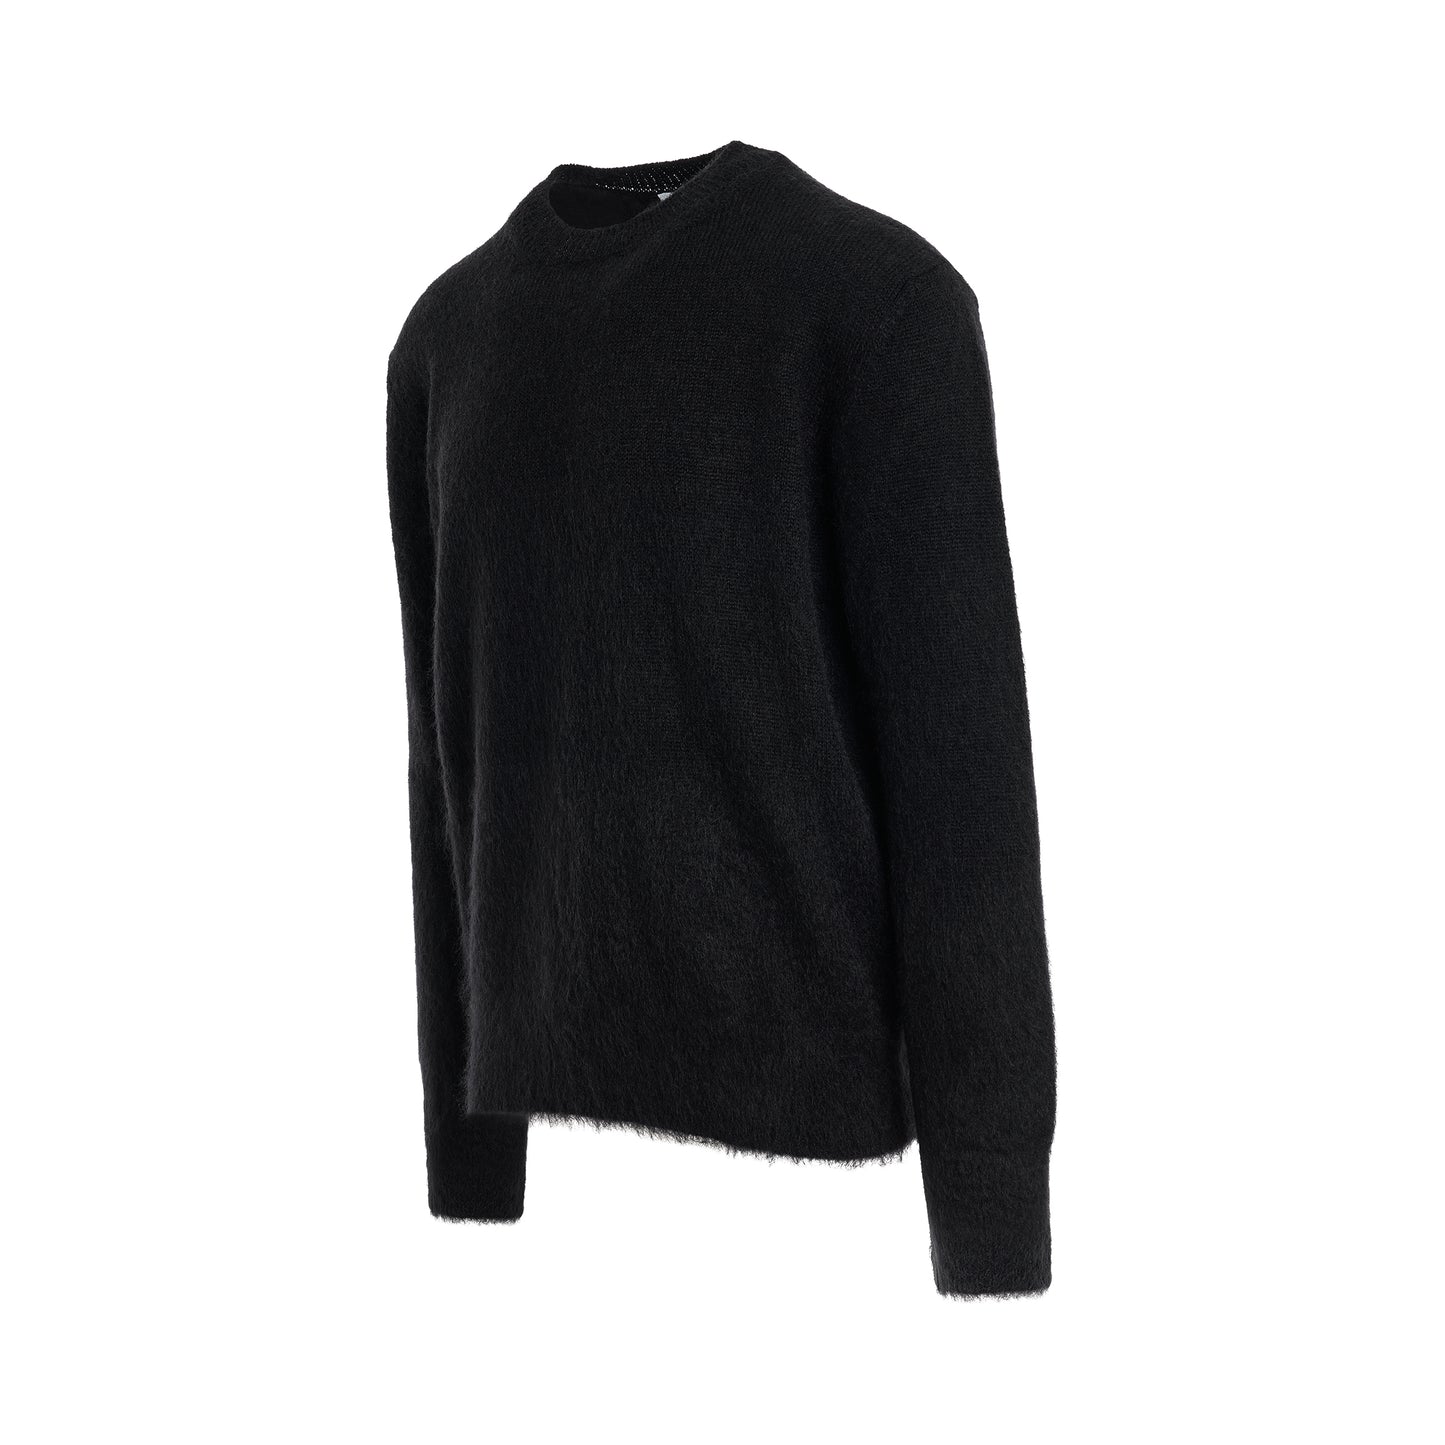 Mohair Arrow Knit Sweater in Black/Cream